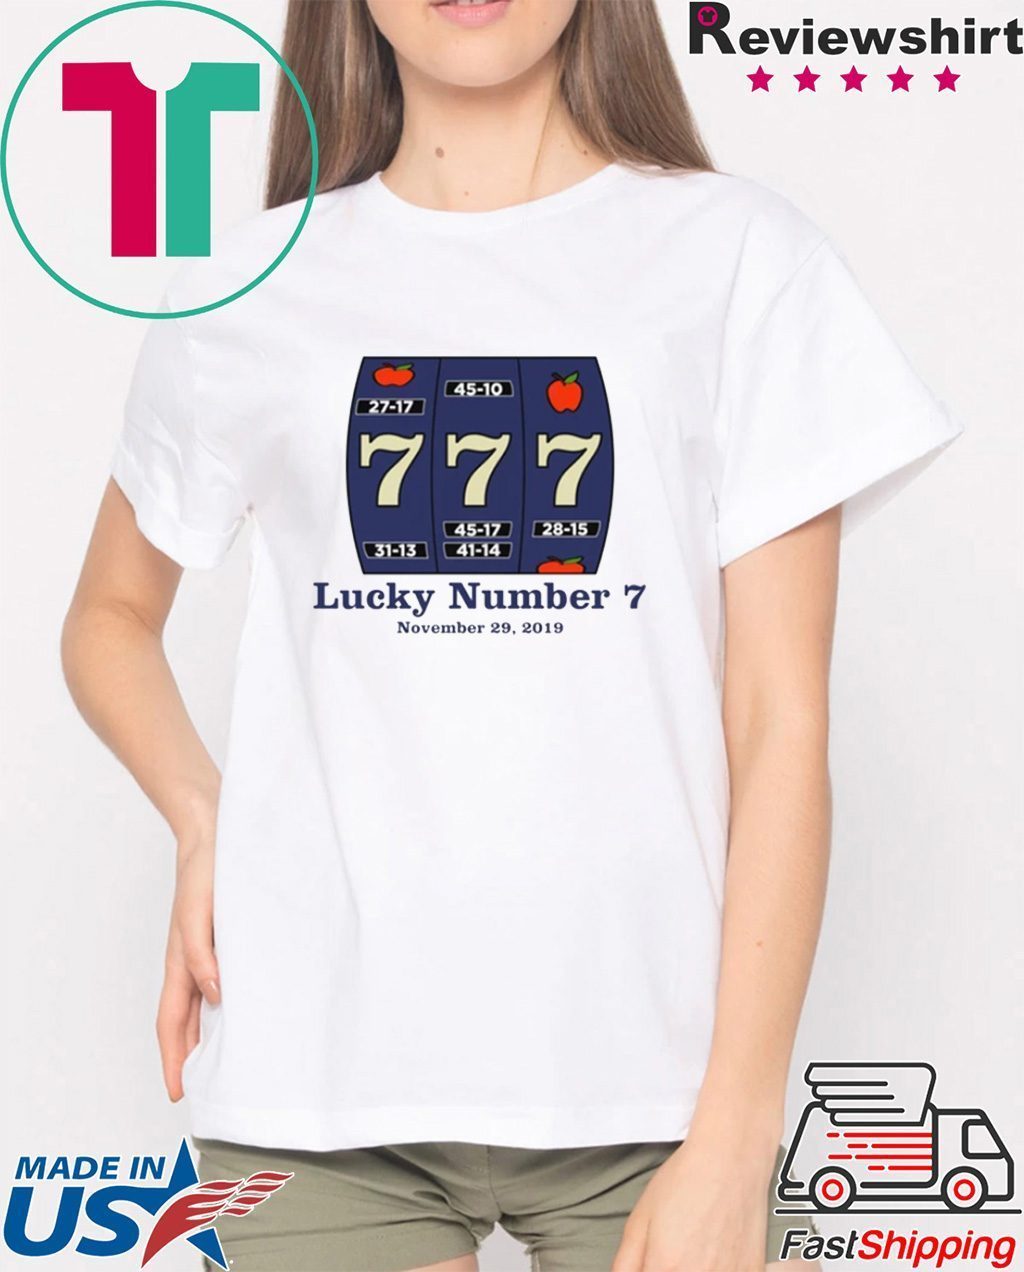 Lucky Number 7 Tee Shirt - Reviewshirts Office